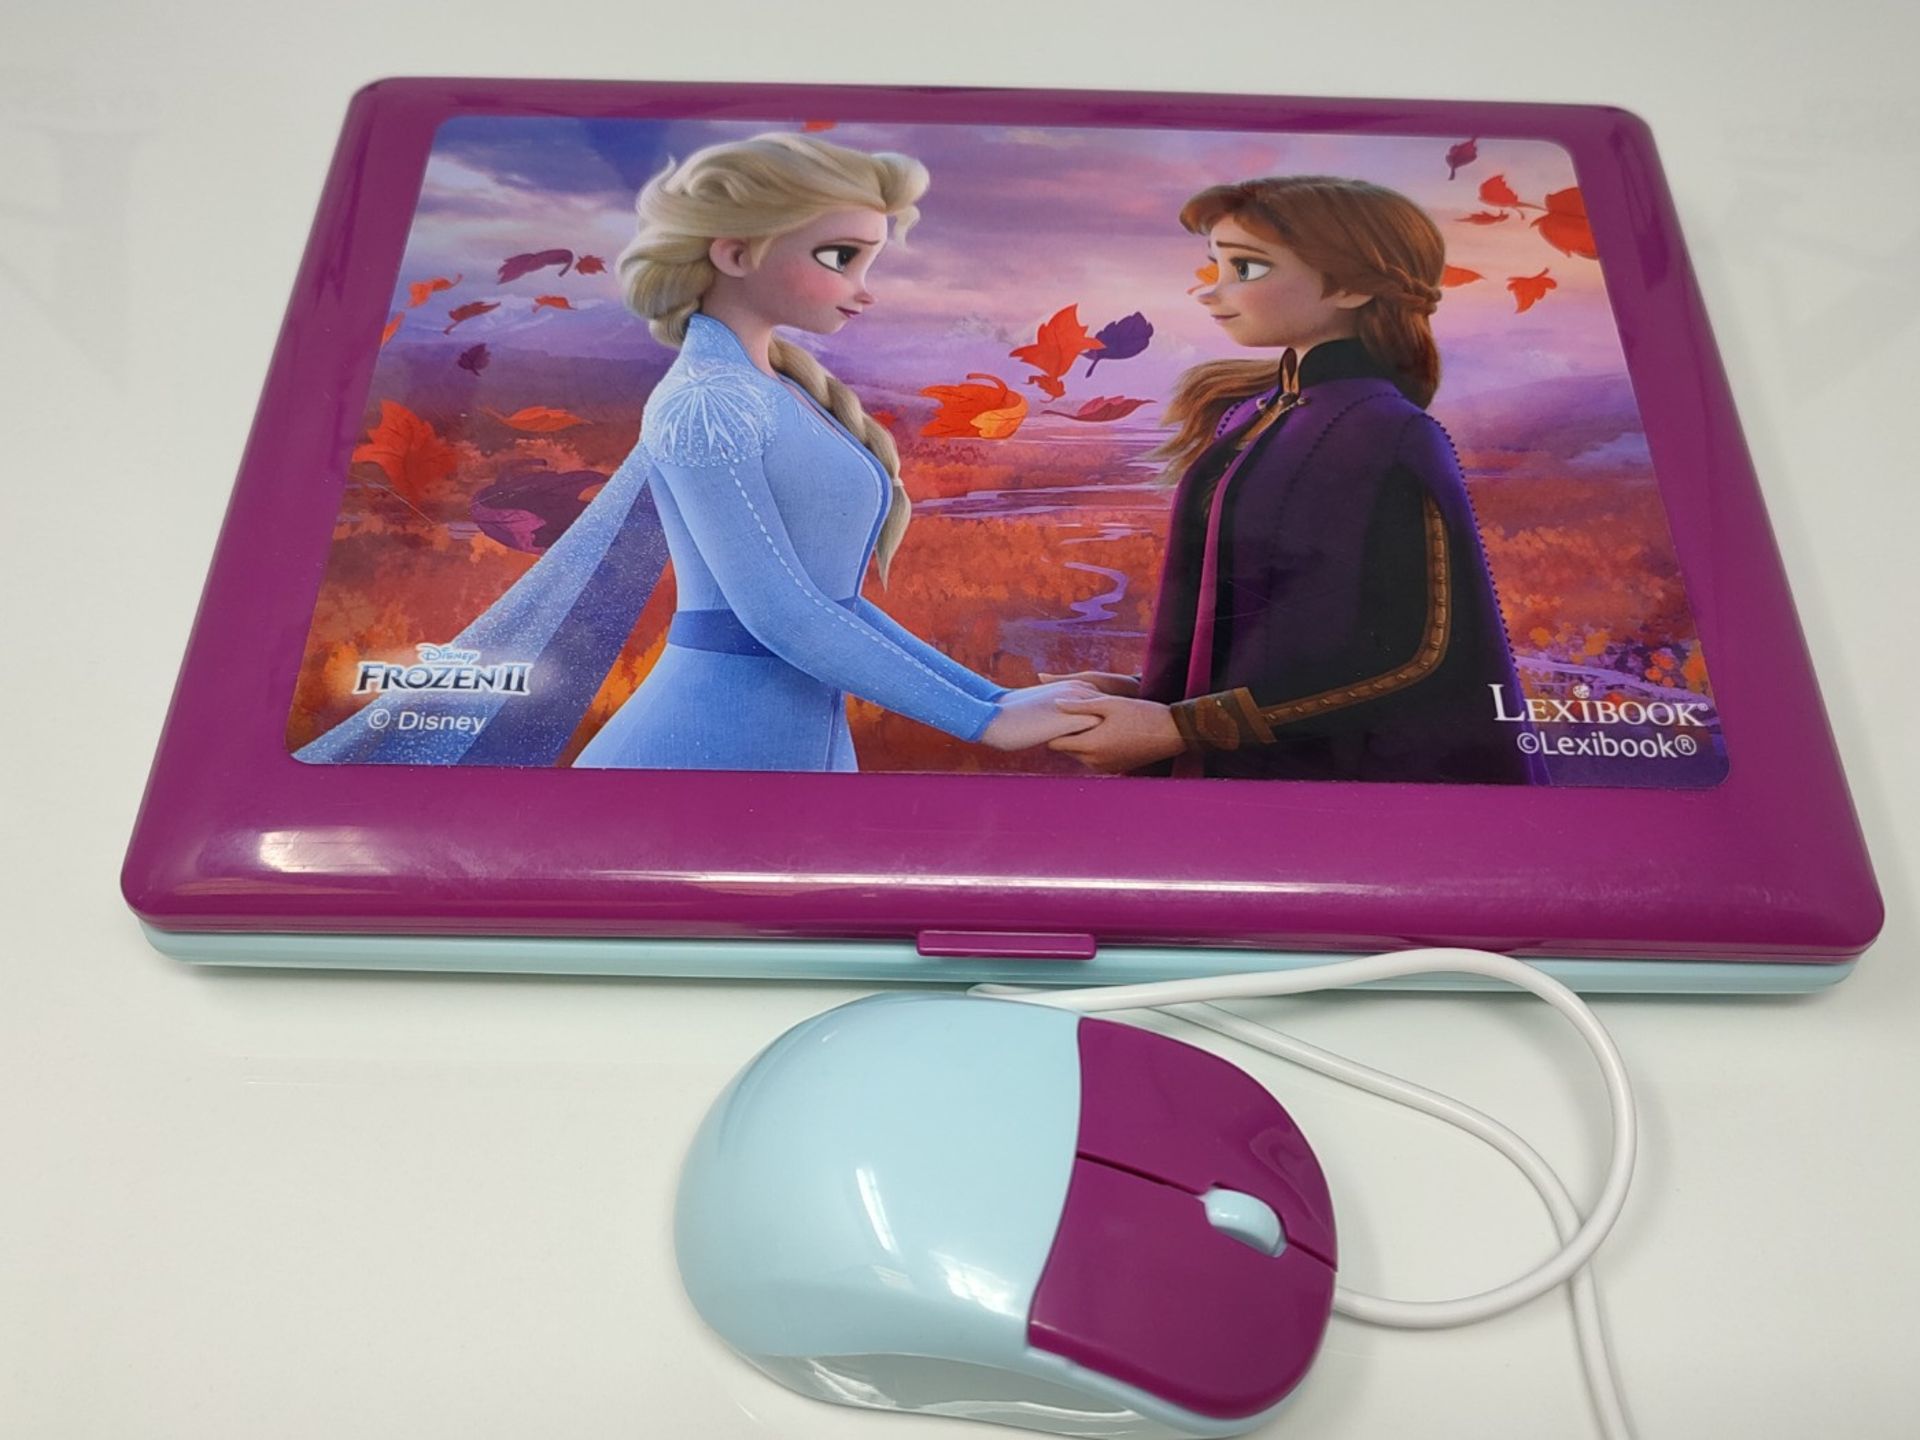 Lexibook Disney Frozen 2 - Educational and Bilingual Laptop German/English - Girls Toy - Image 3 of 3